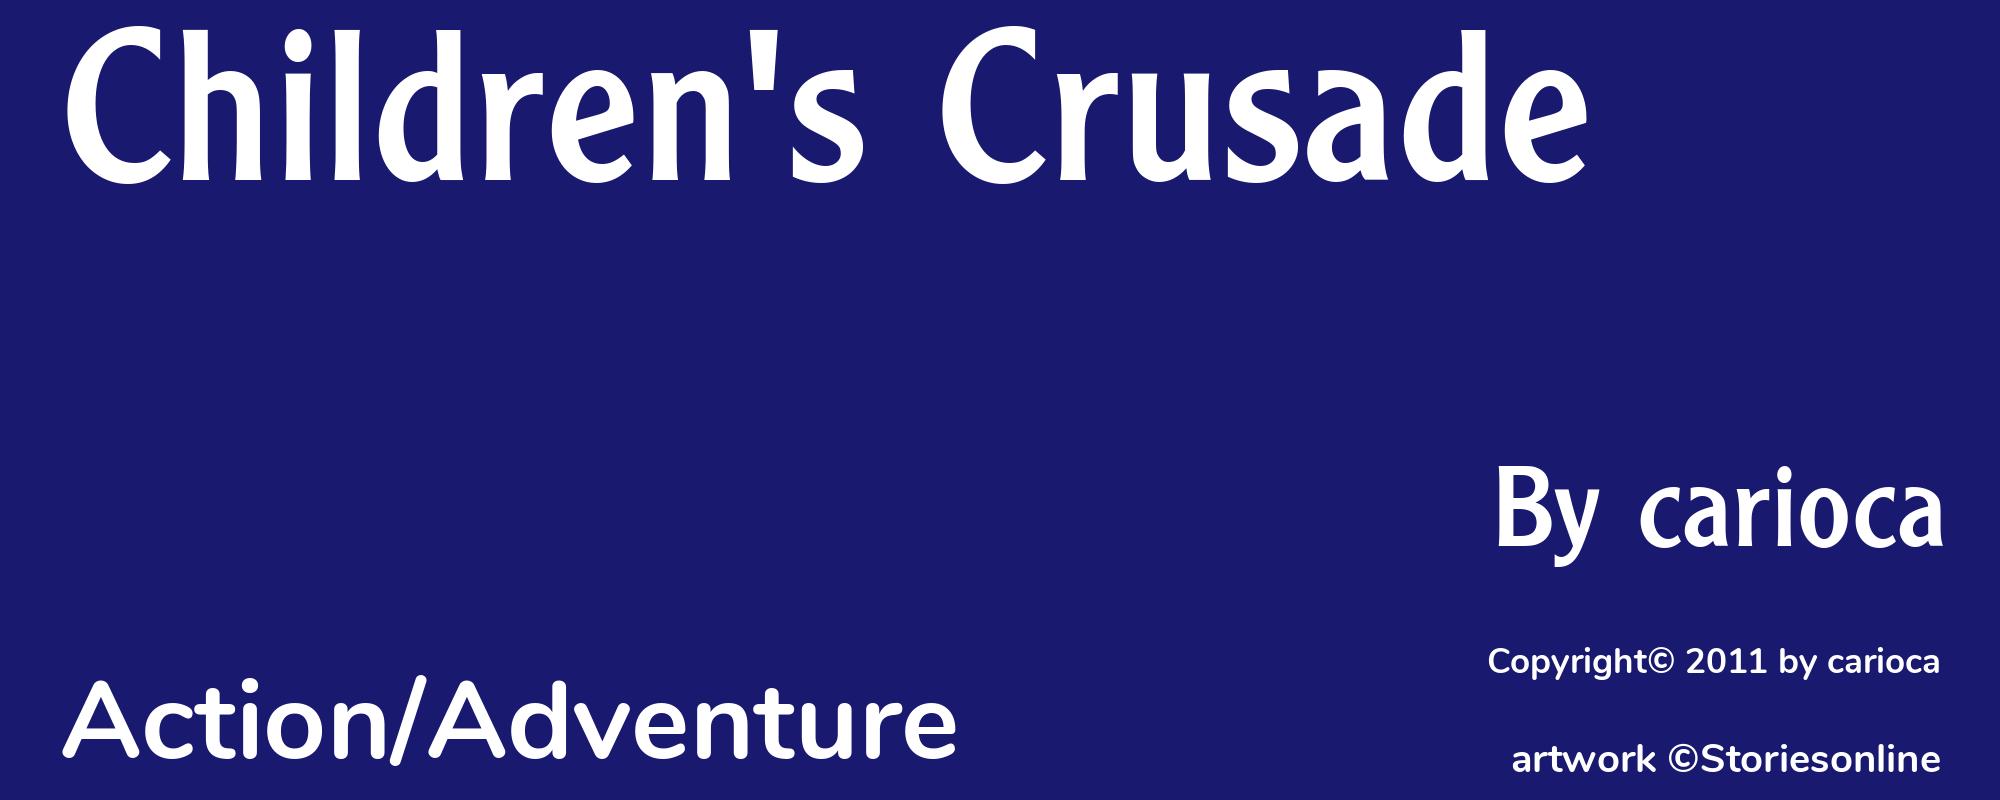 Children's Crusade - Cover